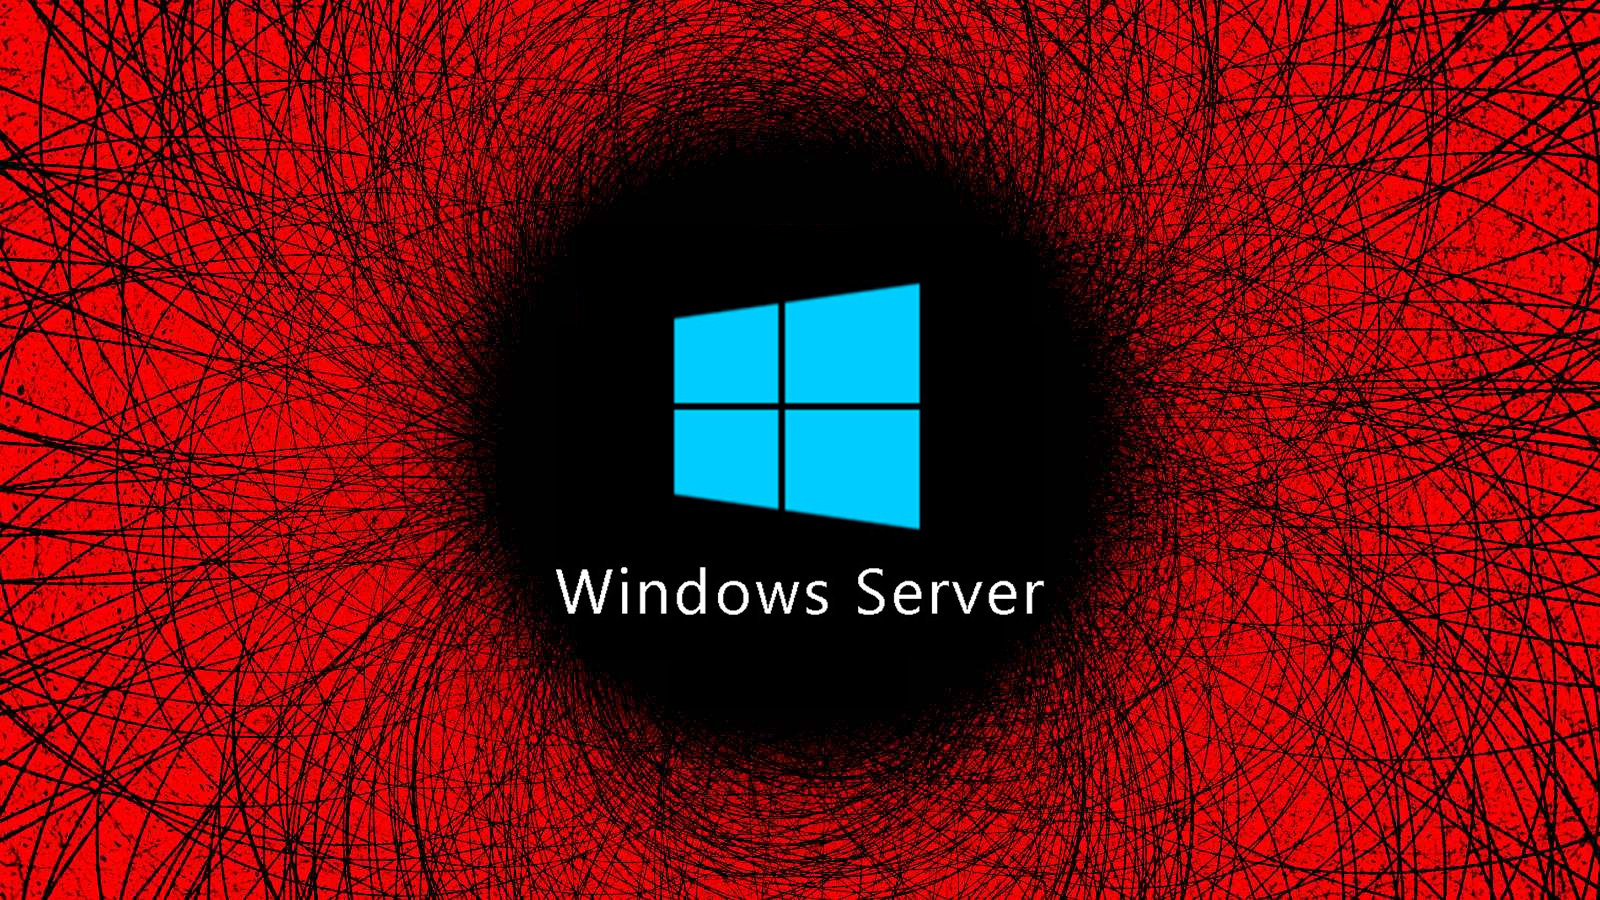 Windows Server in black hole